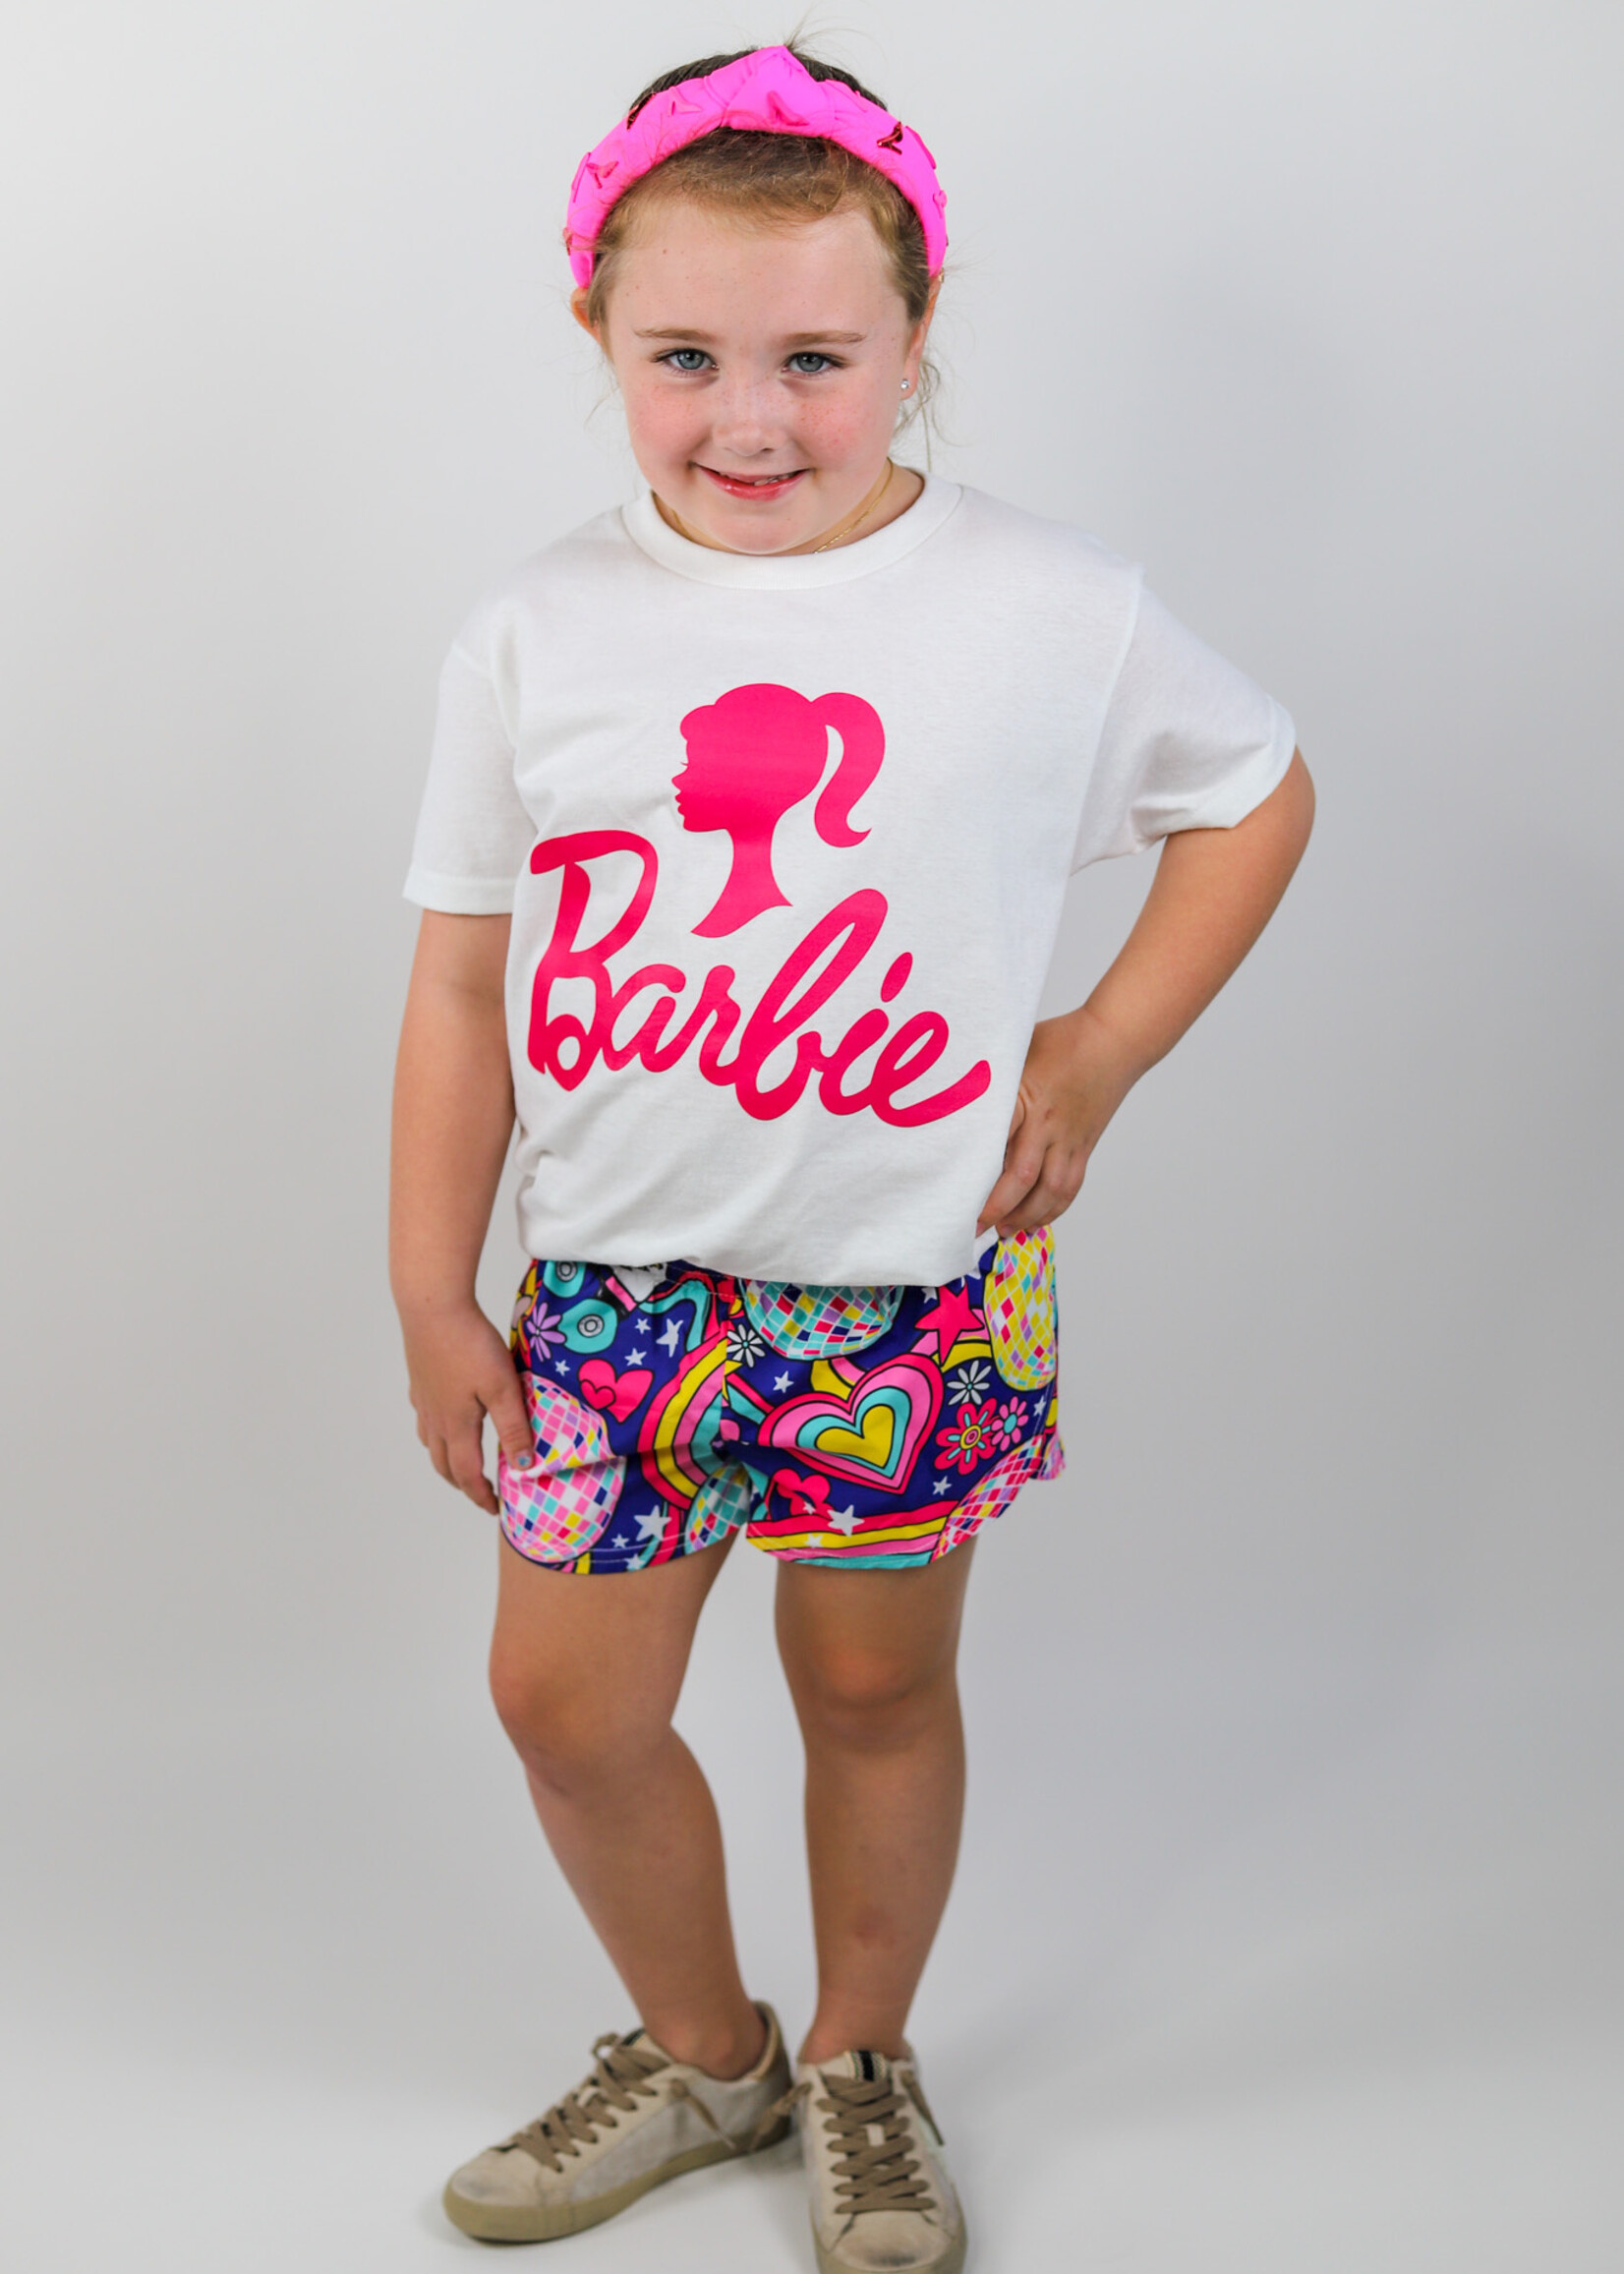 JDB Barbie Girl Tee | Kids